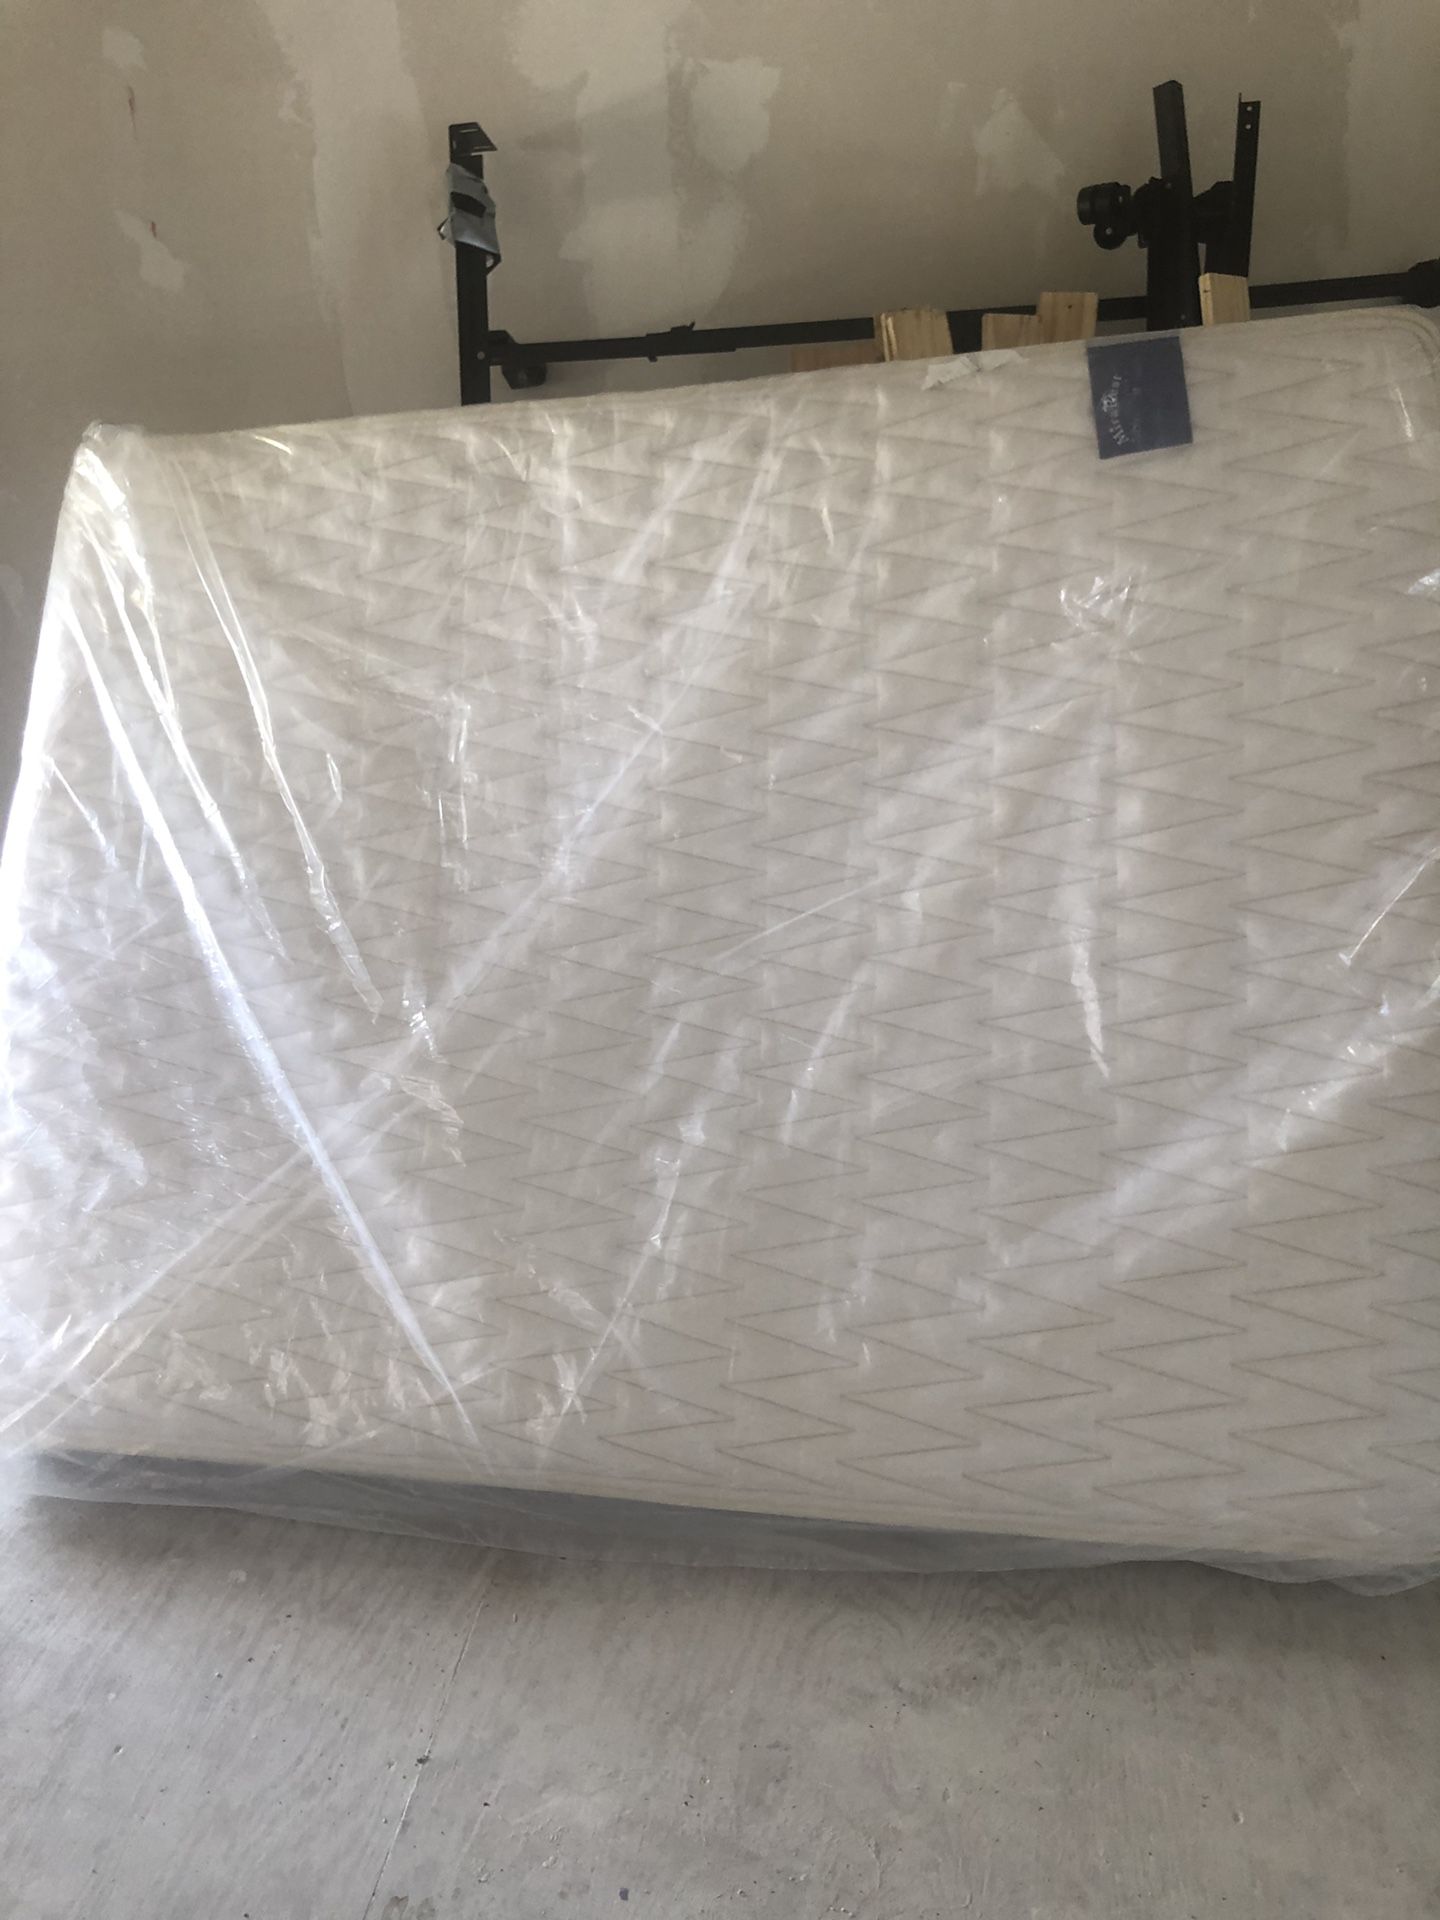 Queen mattress like new , still in original plastic bag